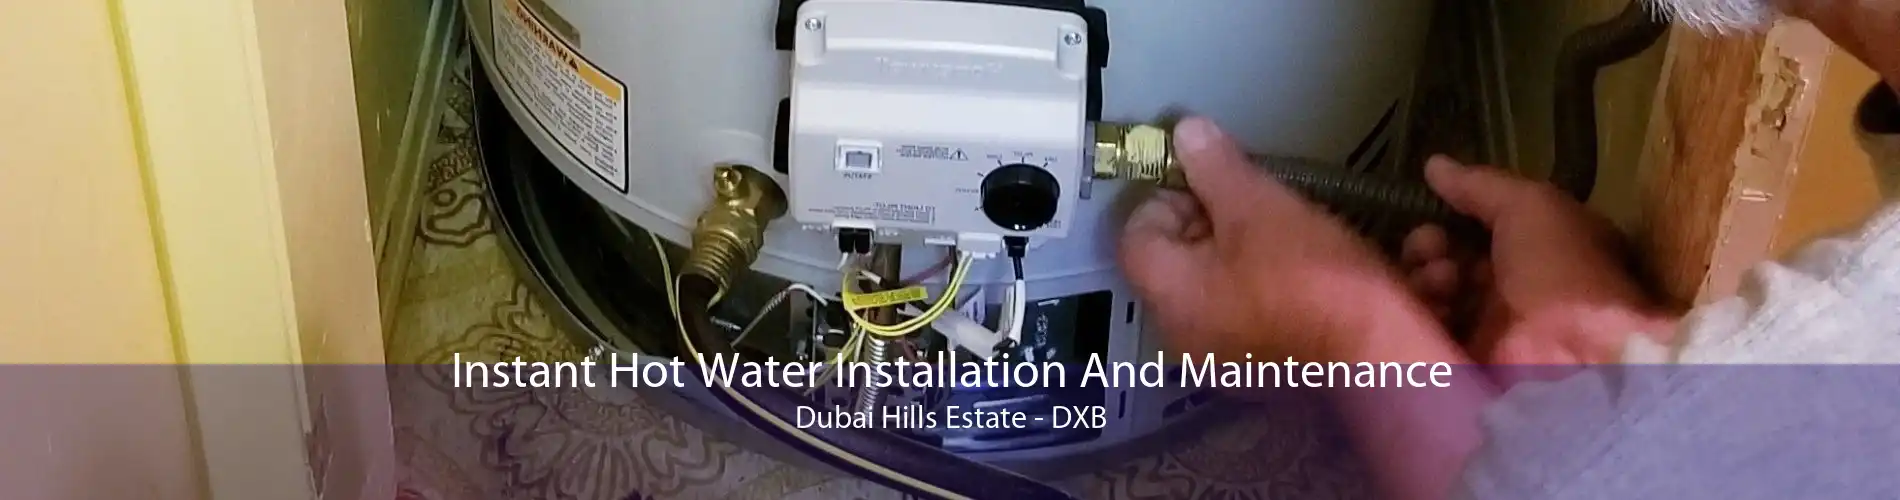 Instant Hot Water Installation And Maintenance Dubai Hills Estate - DXB